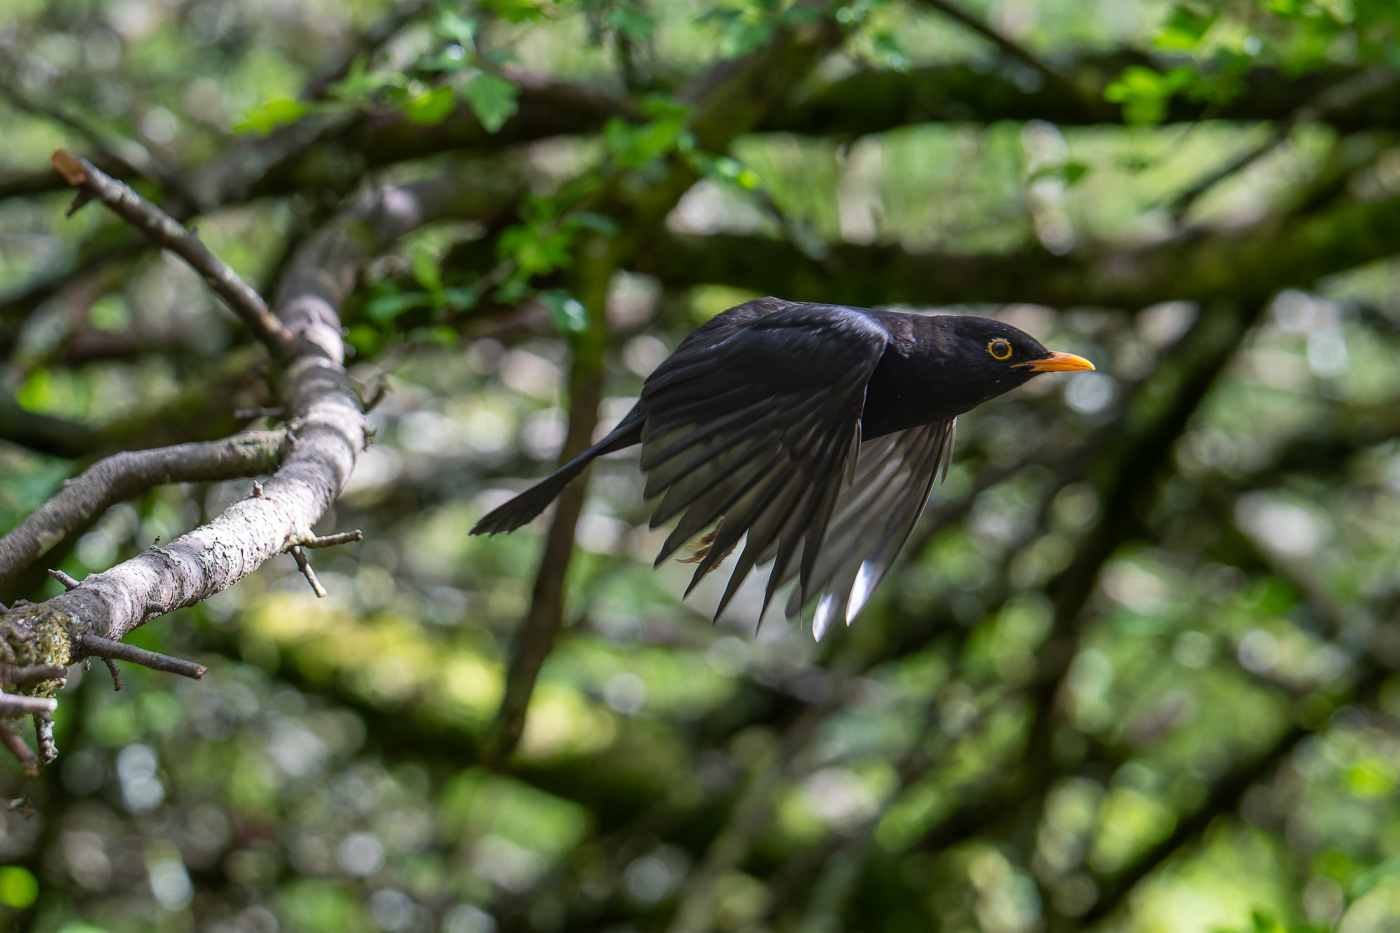 Blackbird in flight with  the Nikon Z8 bird AF going well